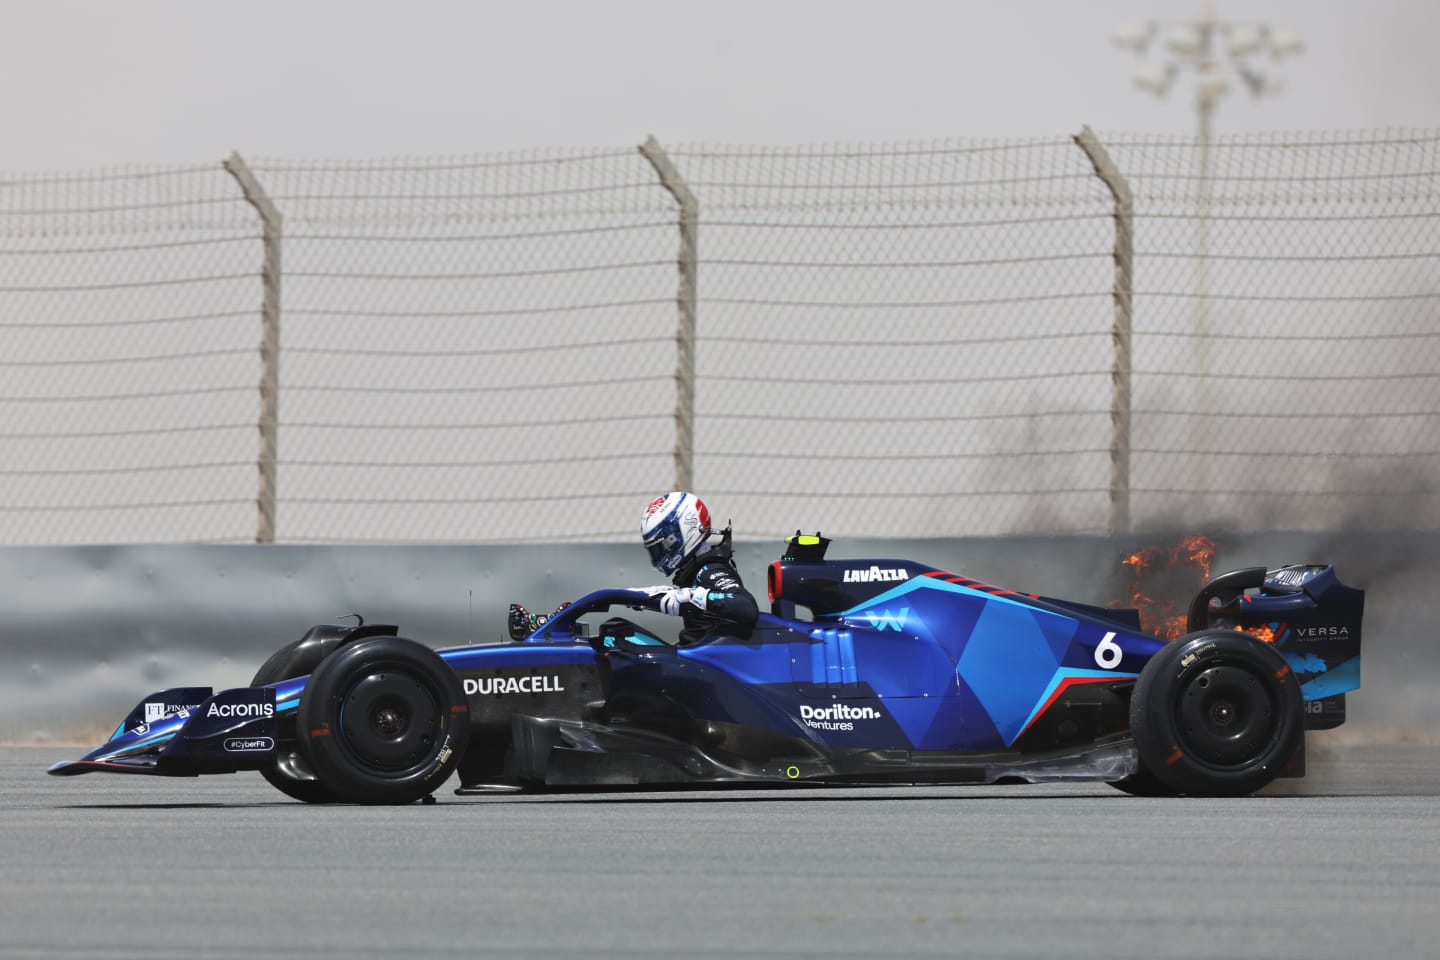 BAHRAIN, BAHRAIN - MARCH 11: Nicholas Latifi of Canada and Williams climbs from his car as his rear